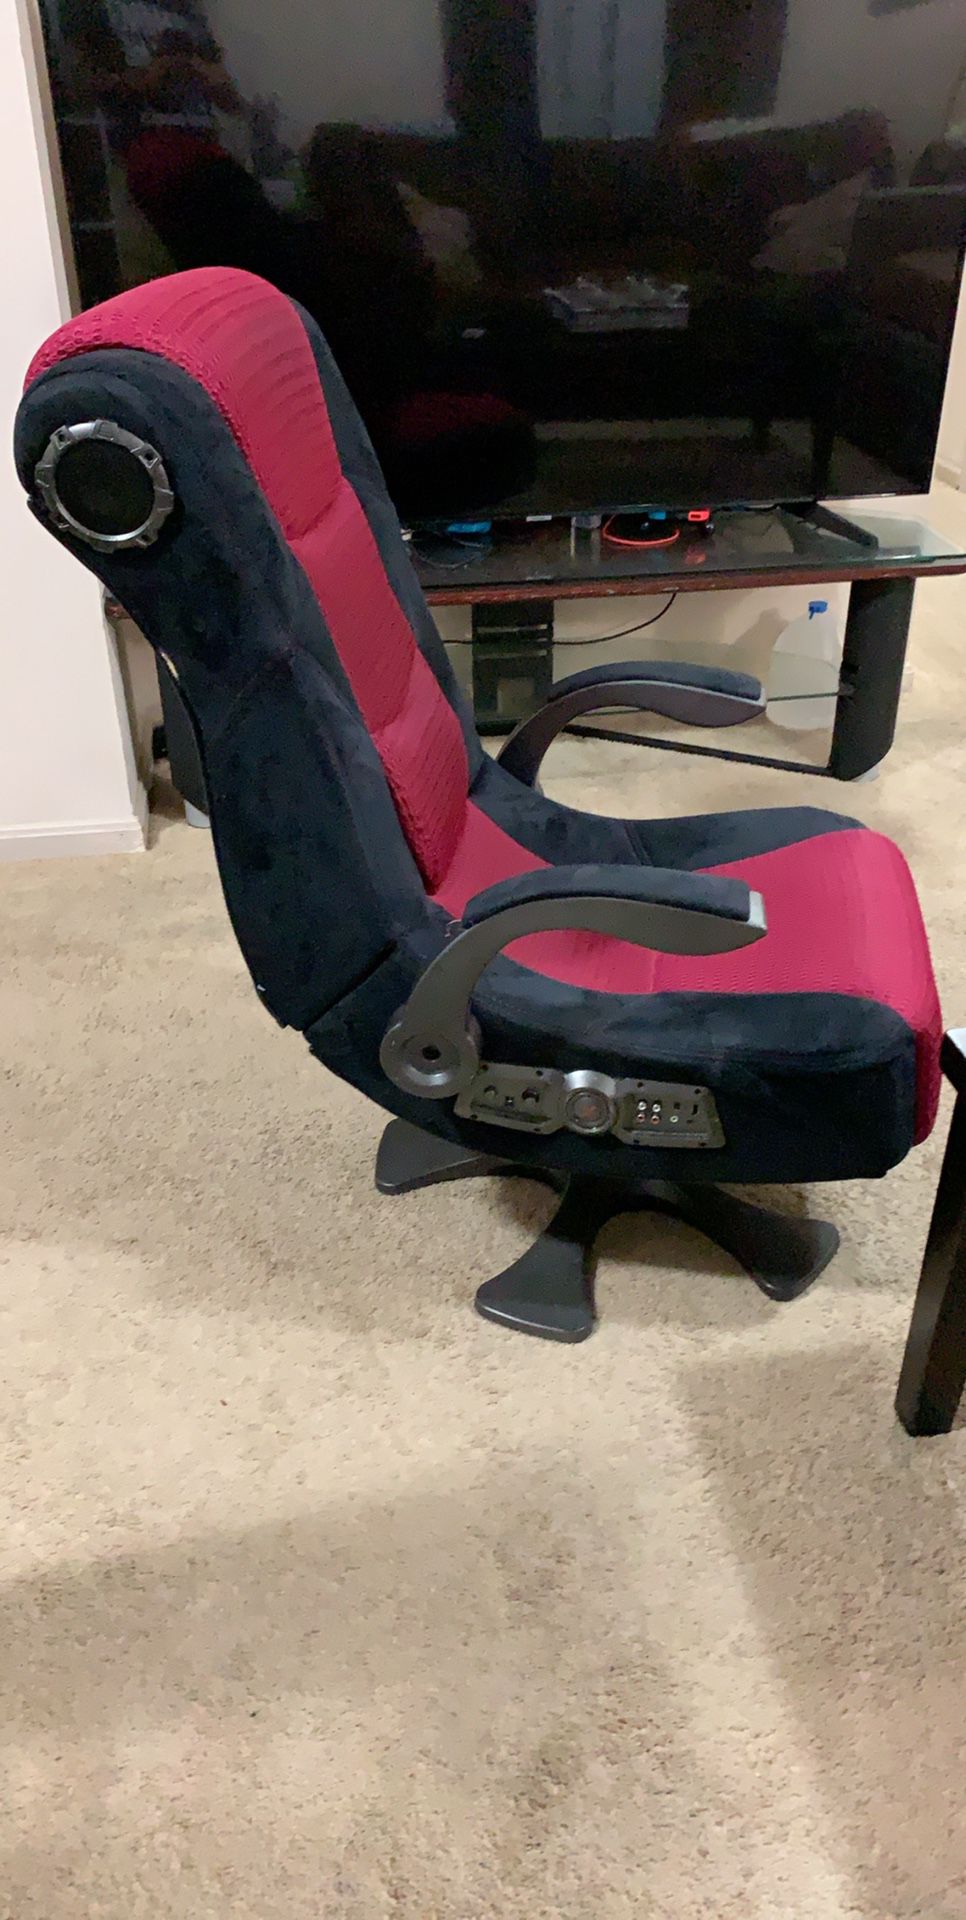 X Rocker Pro Series gaming chair